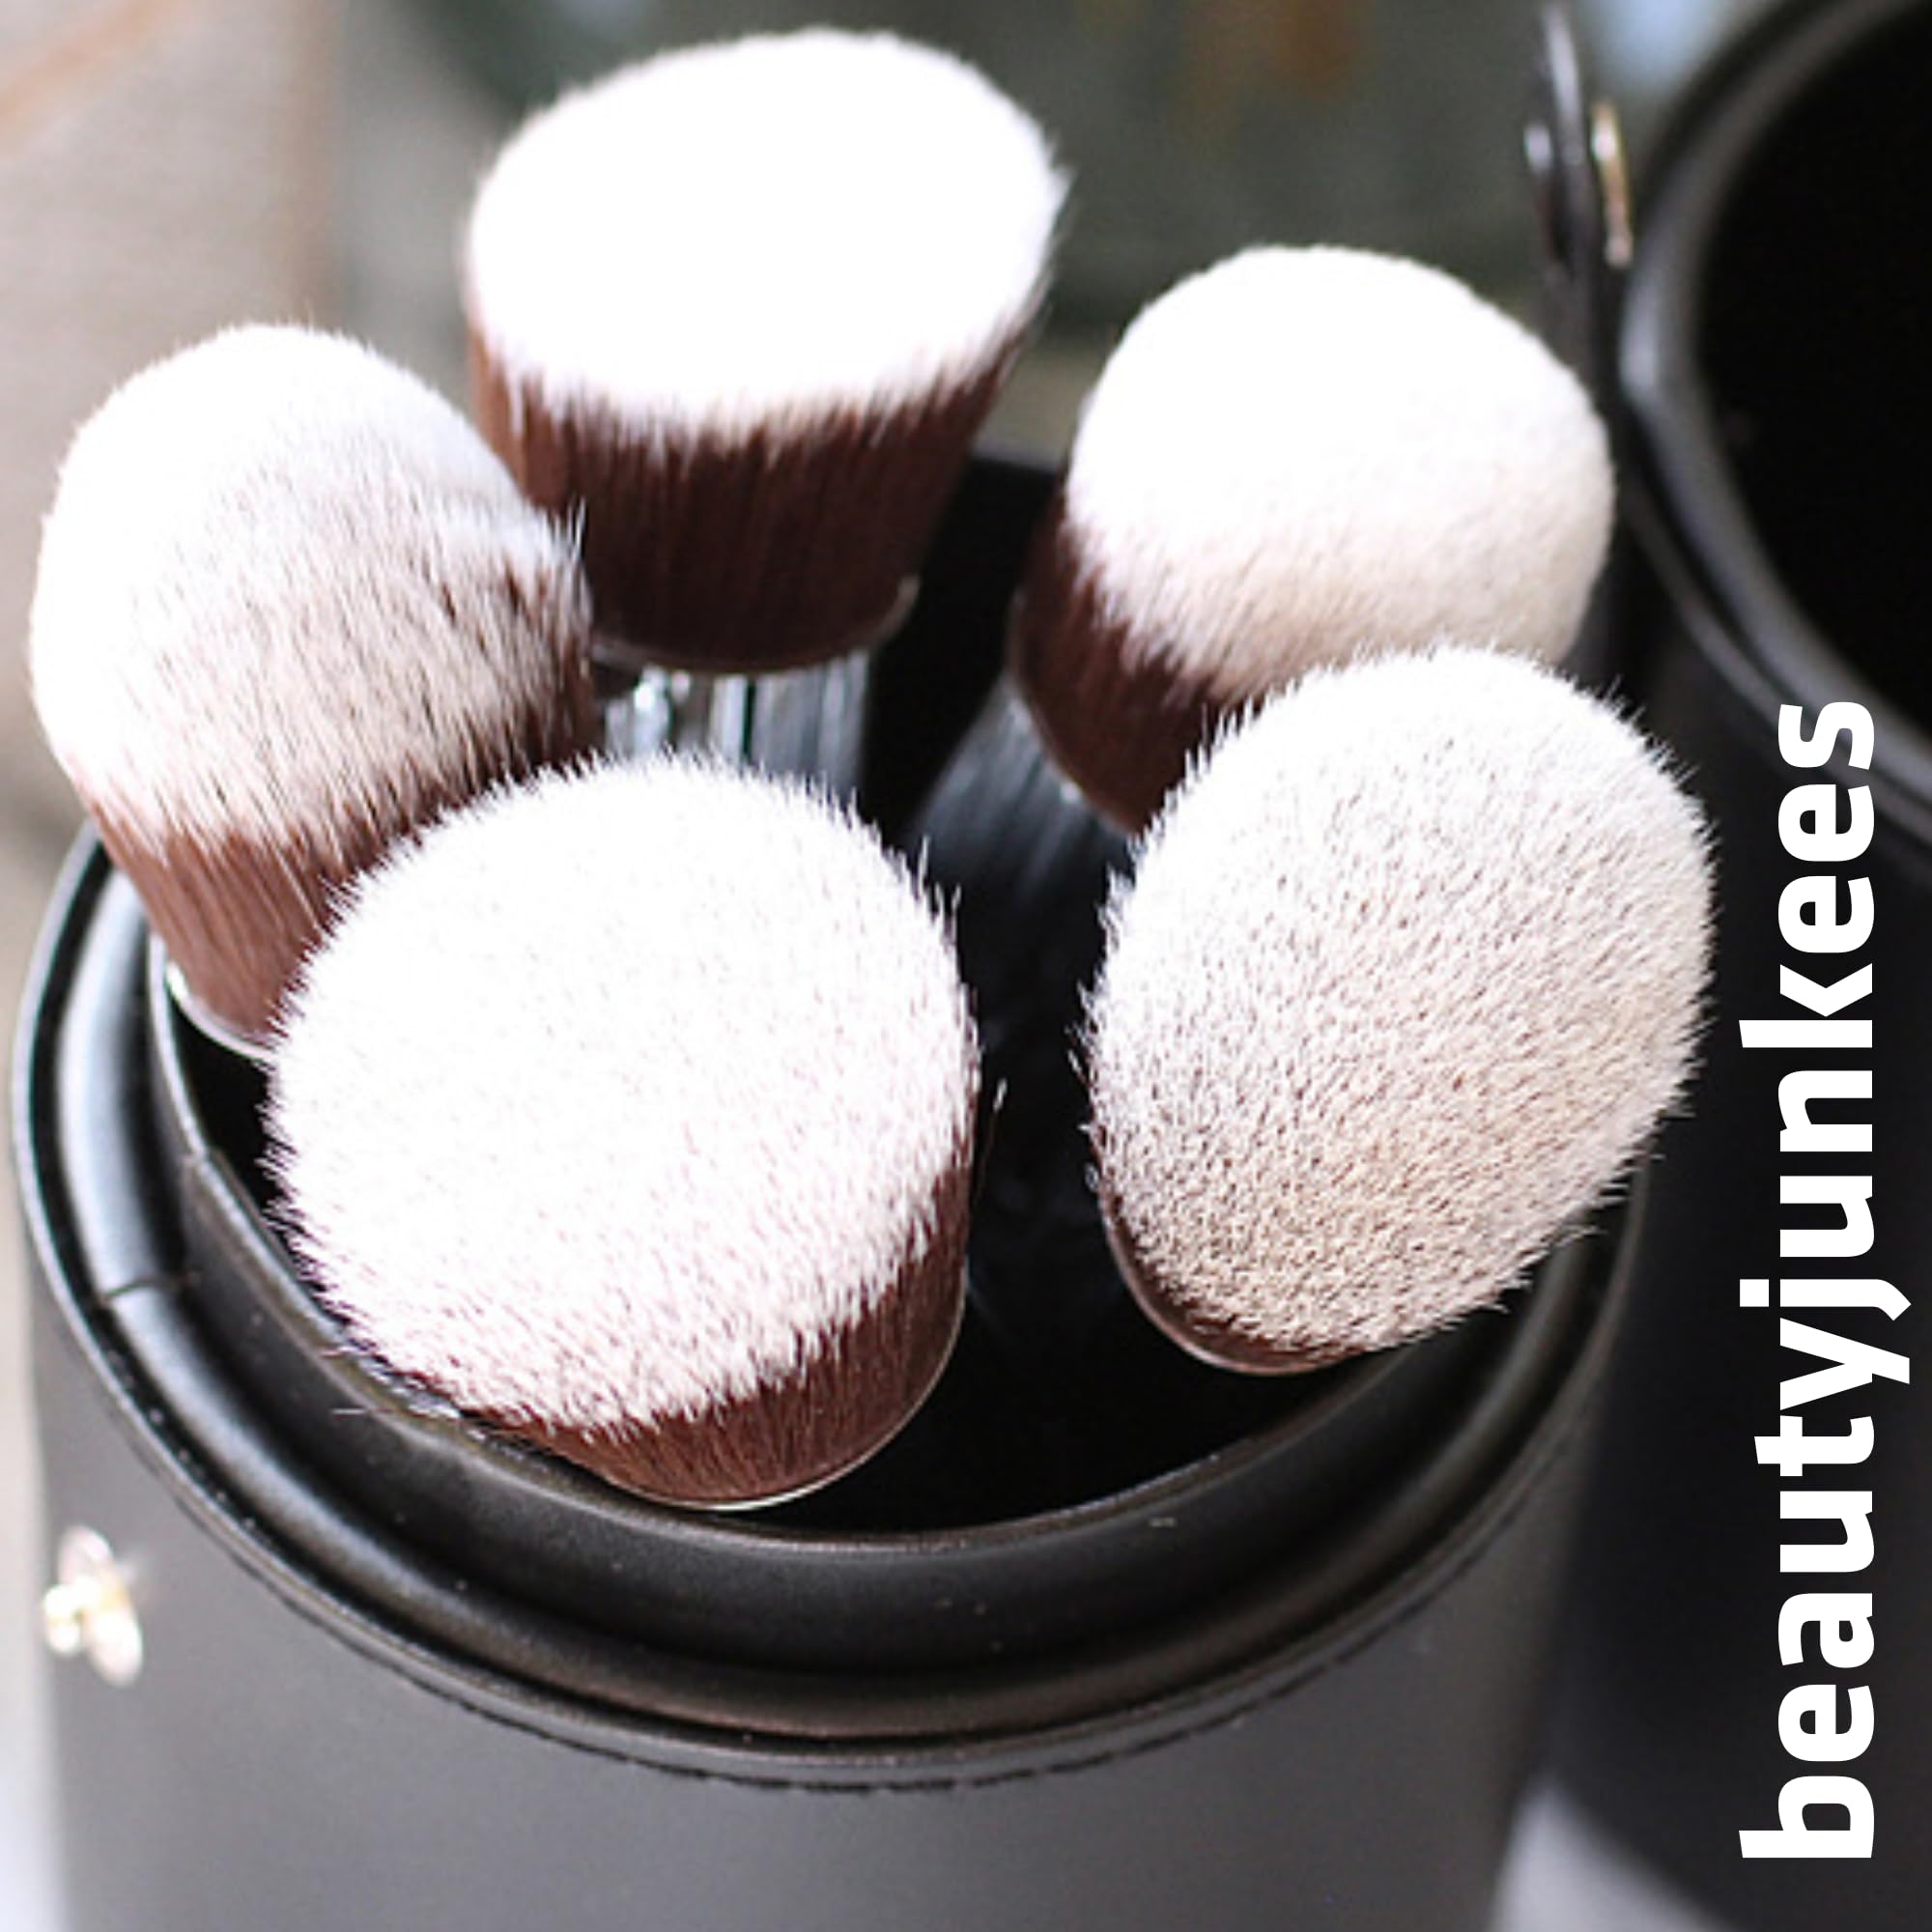 Mineral Powder Foundation Brush for Face – Round Kabuki Brush for Blending, Buffing, Blurring, Setting, Finishing with Loose, Pressed Powders, Liquid, Cream, Bronzer, Blush Makeup, Full Coverage